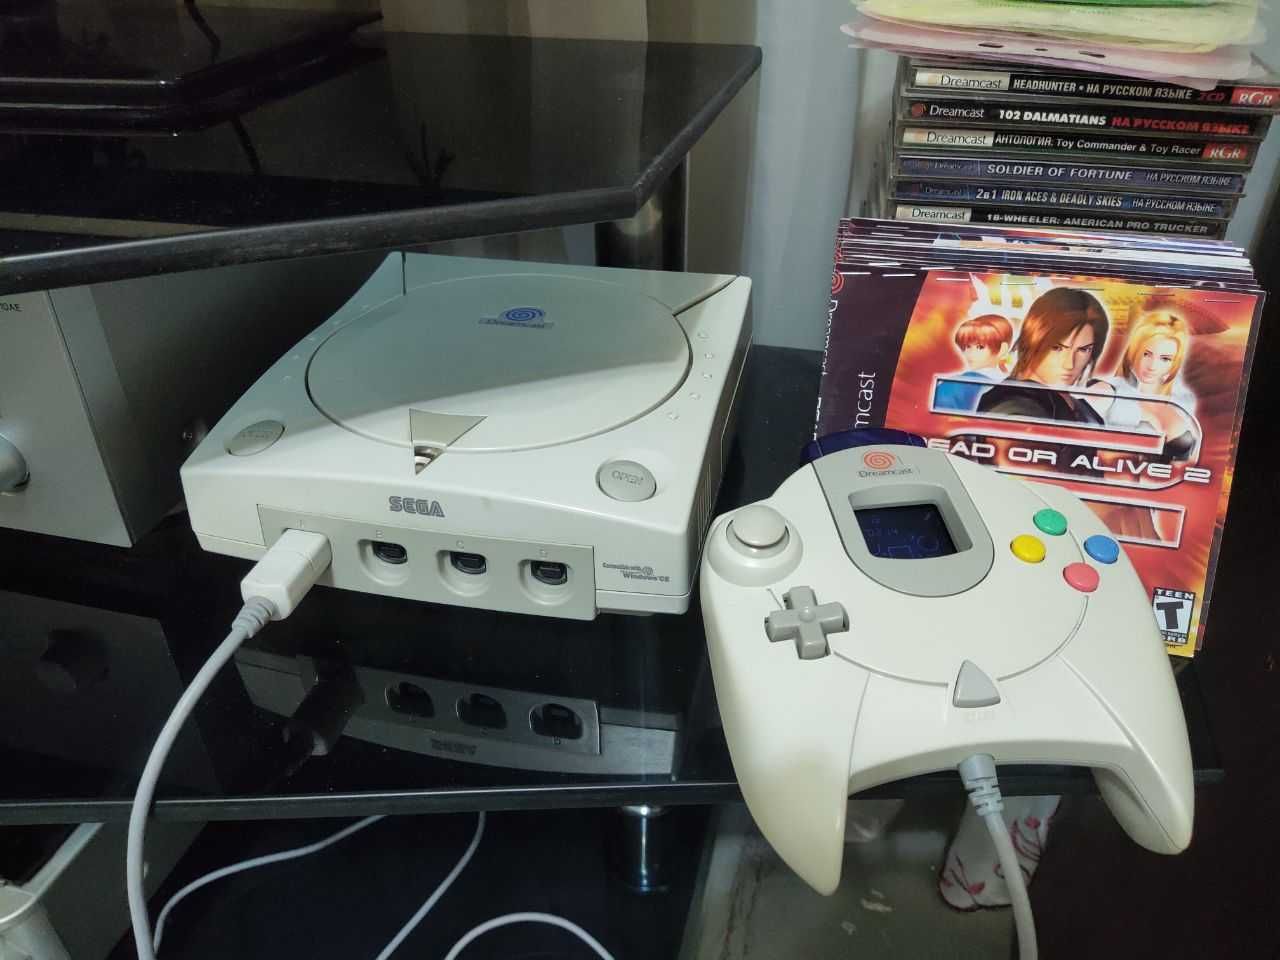 Sega Dreamcast HKT-3030 PAL